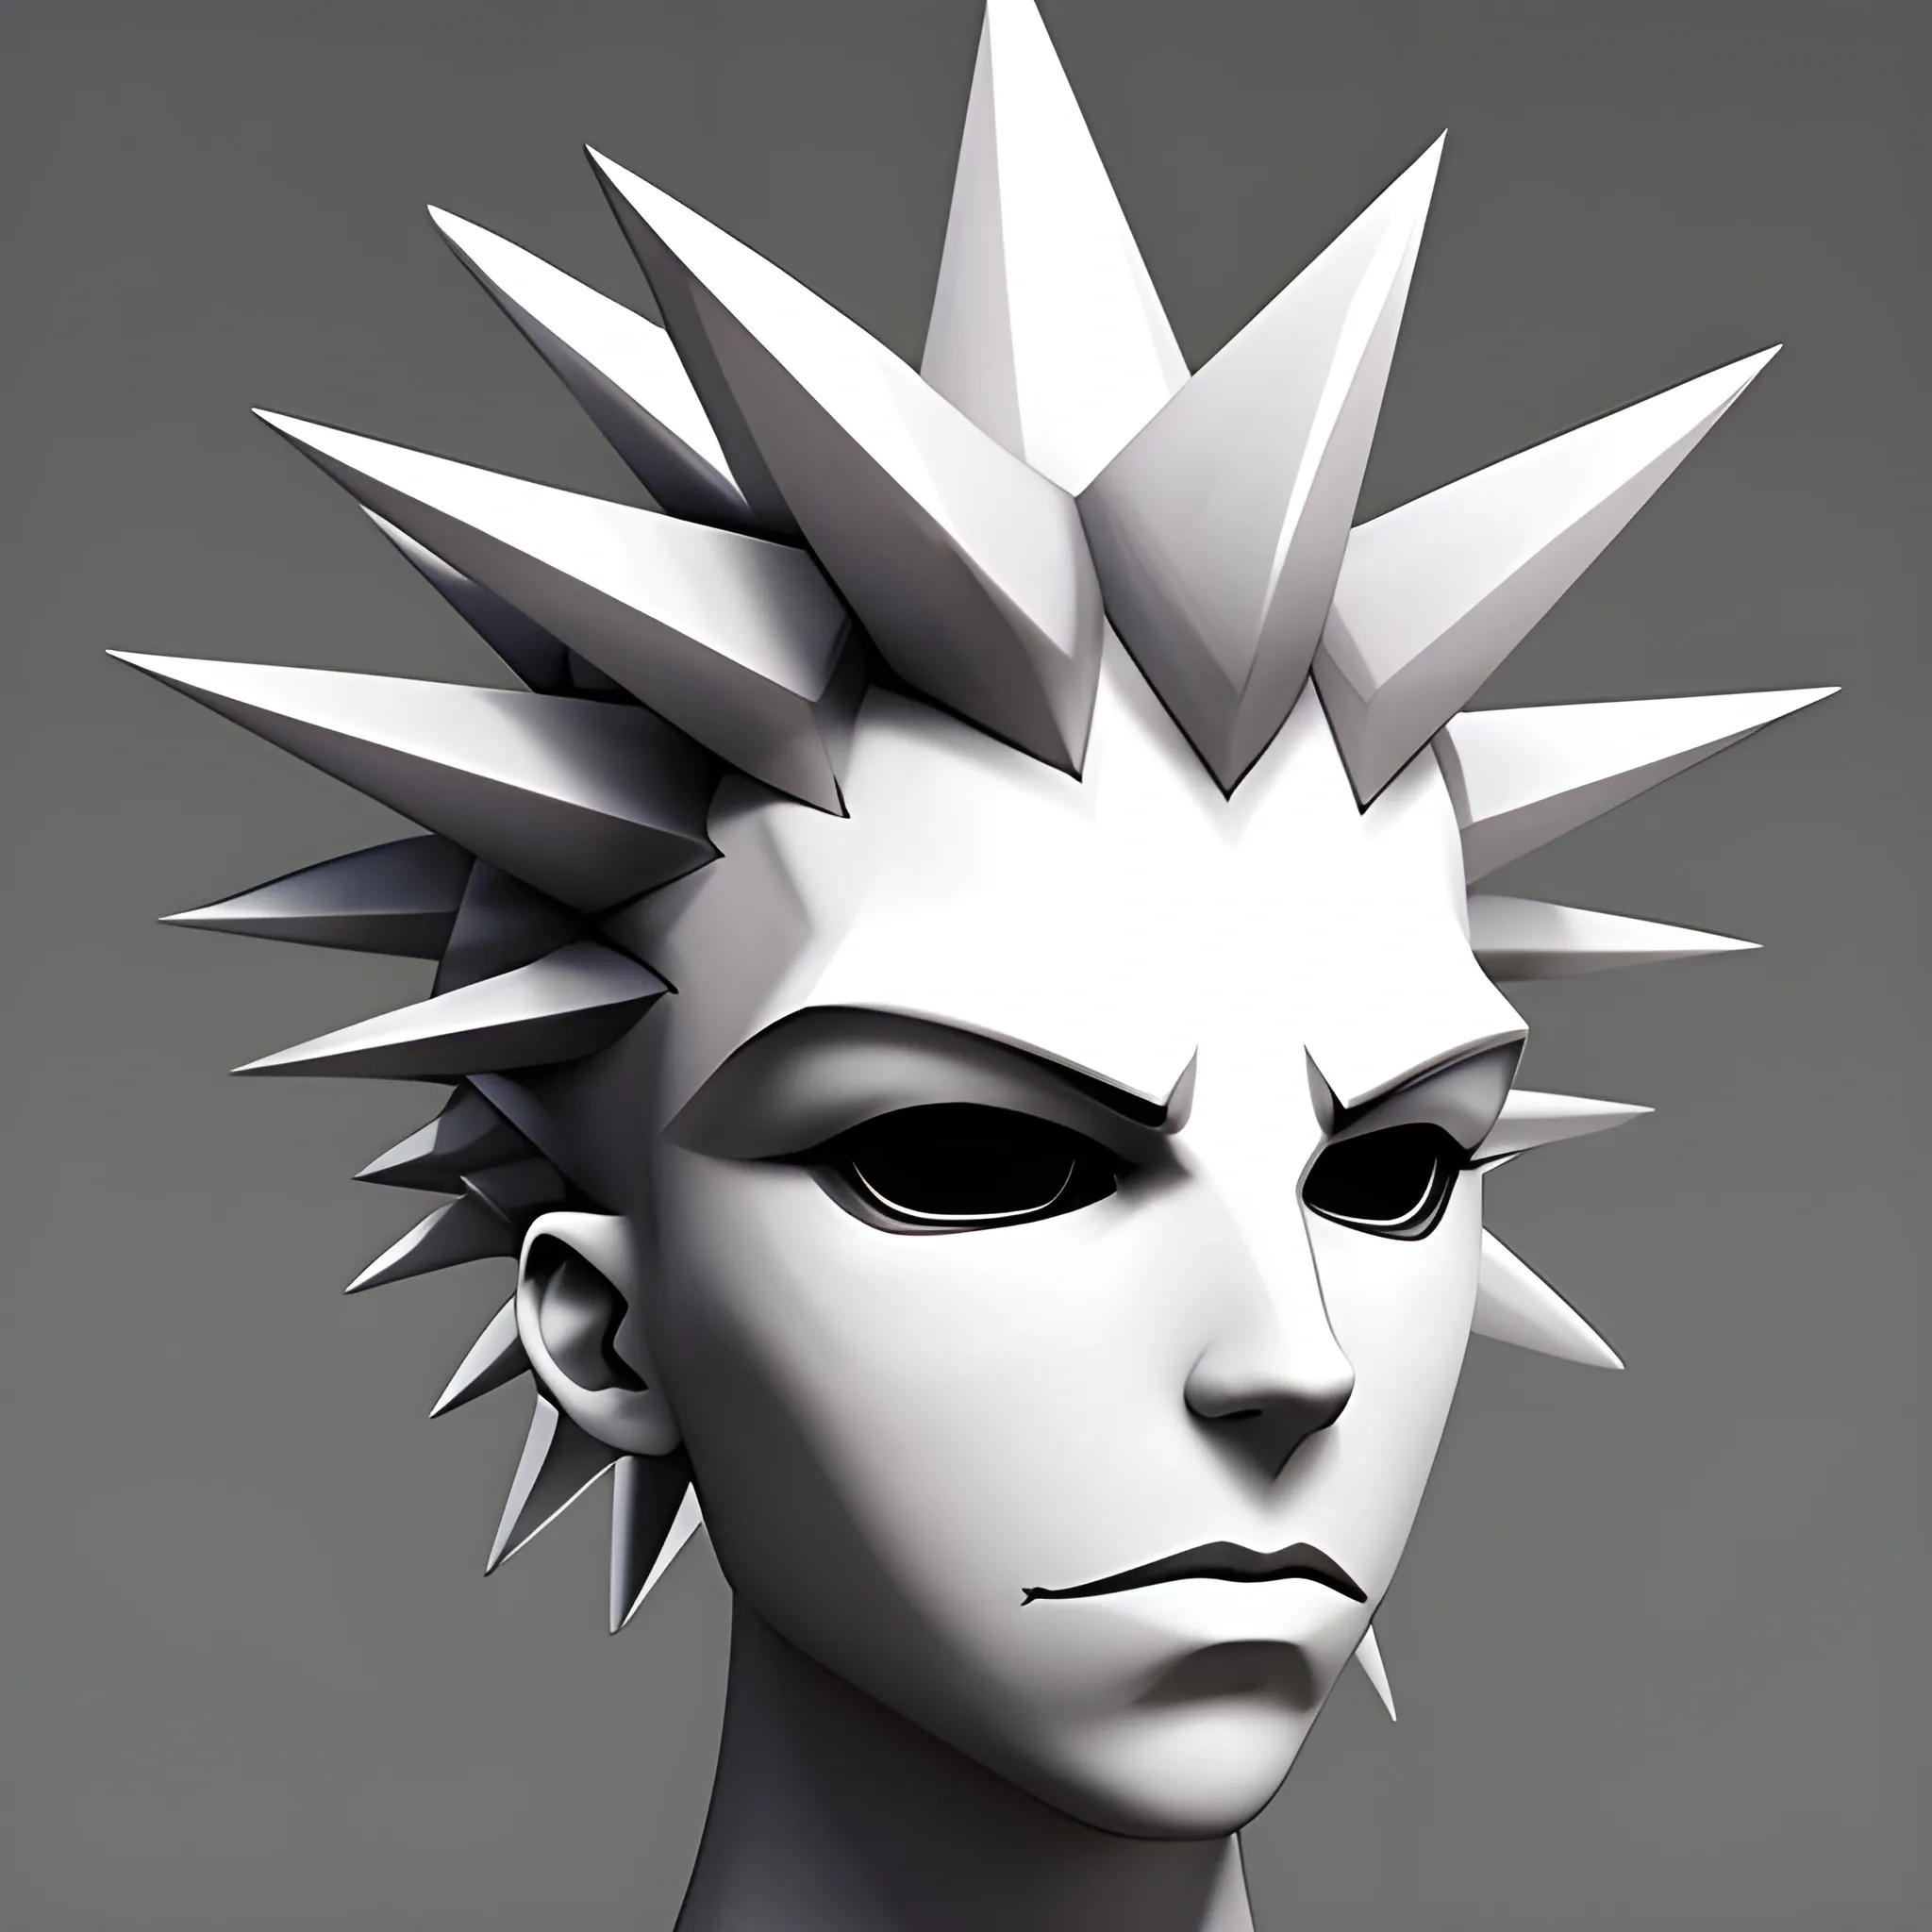 Spiky Head Punk White Character, Eye Shape of Plus Symbol, 3D